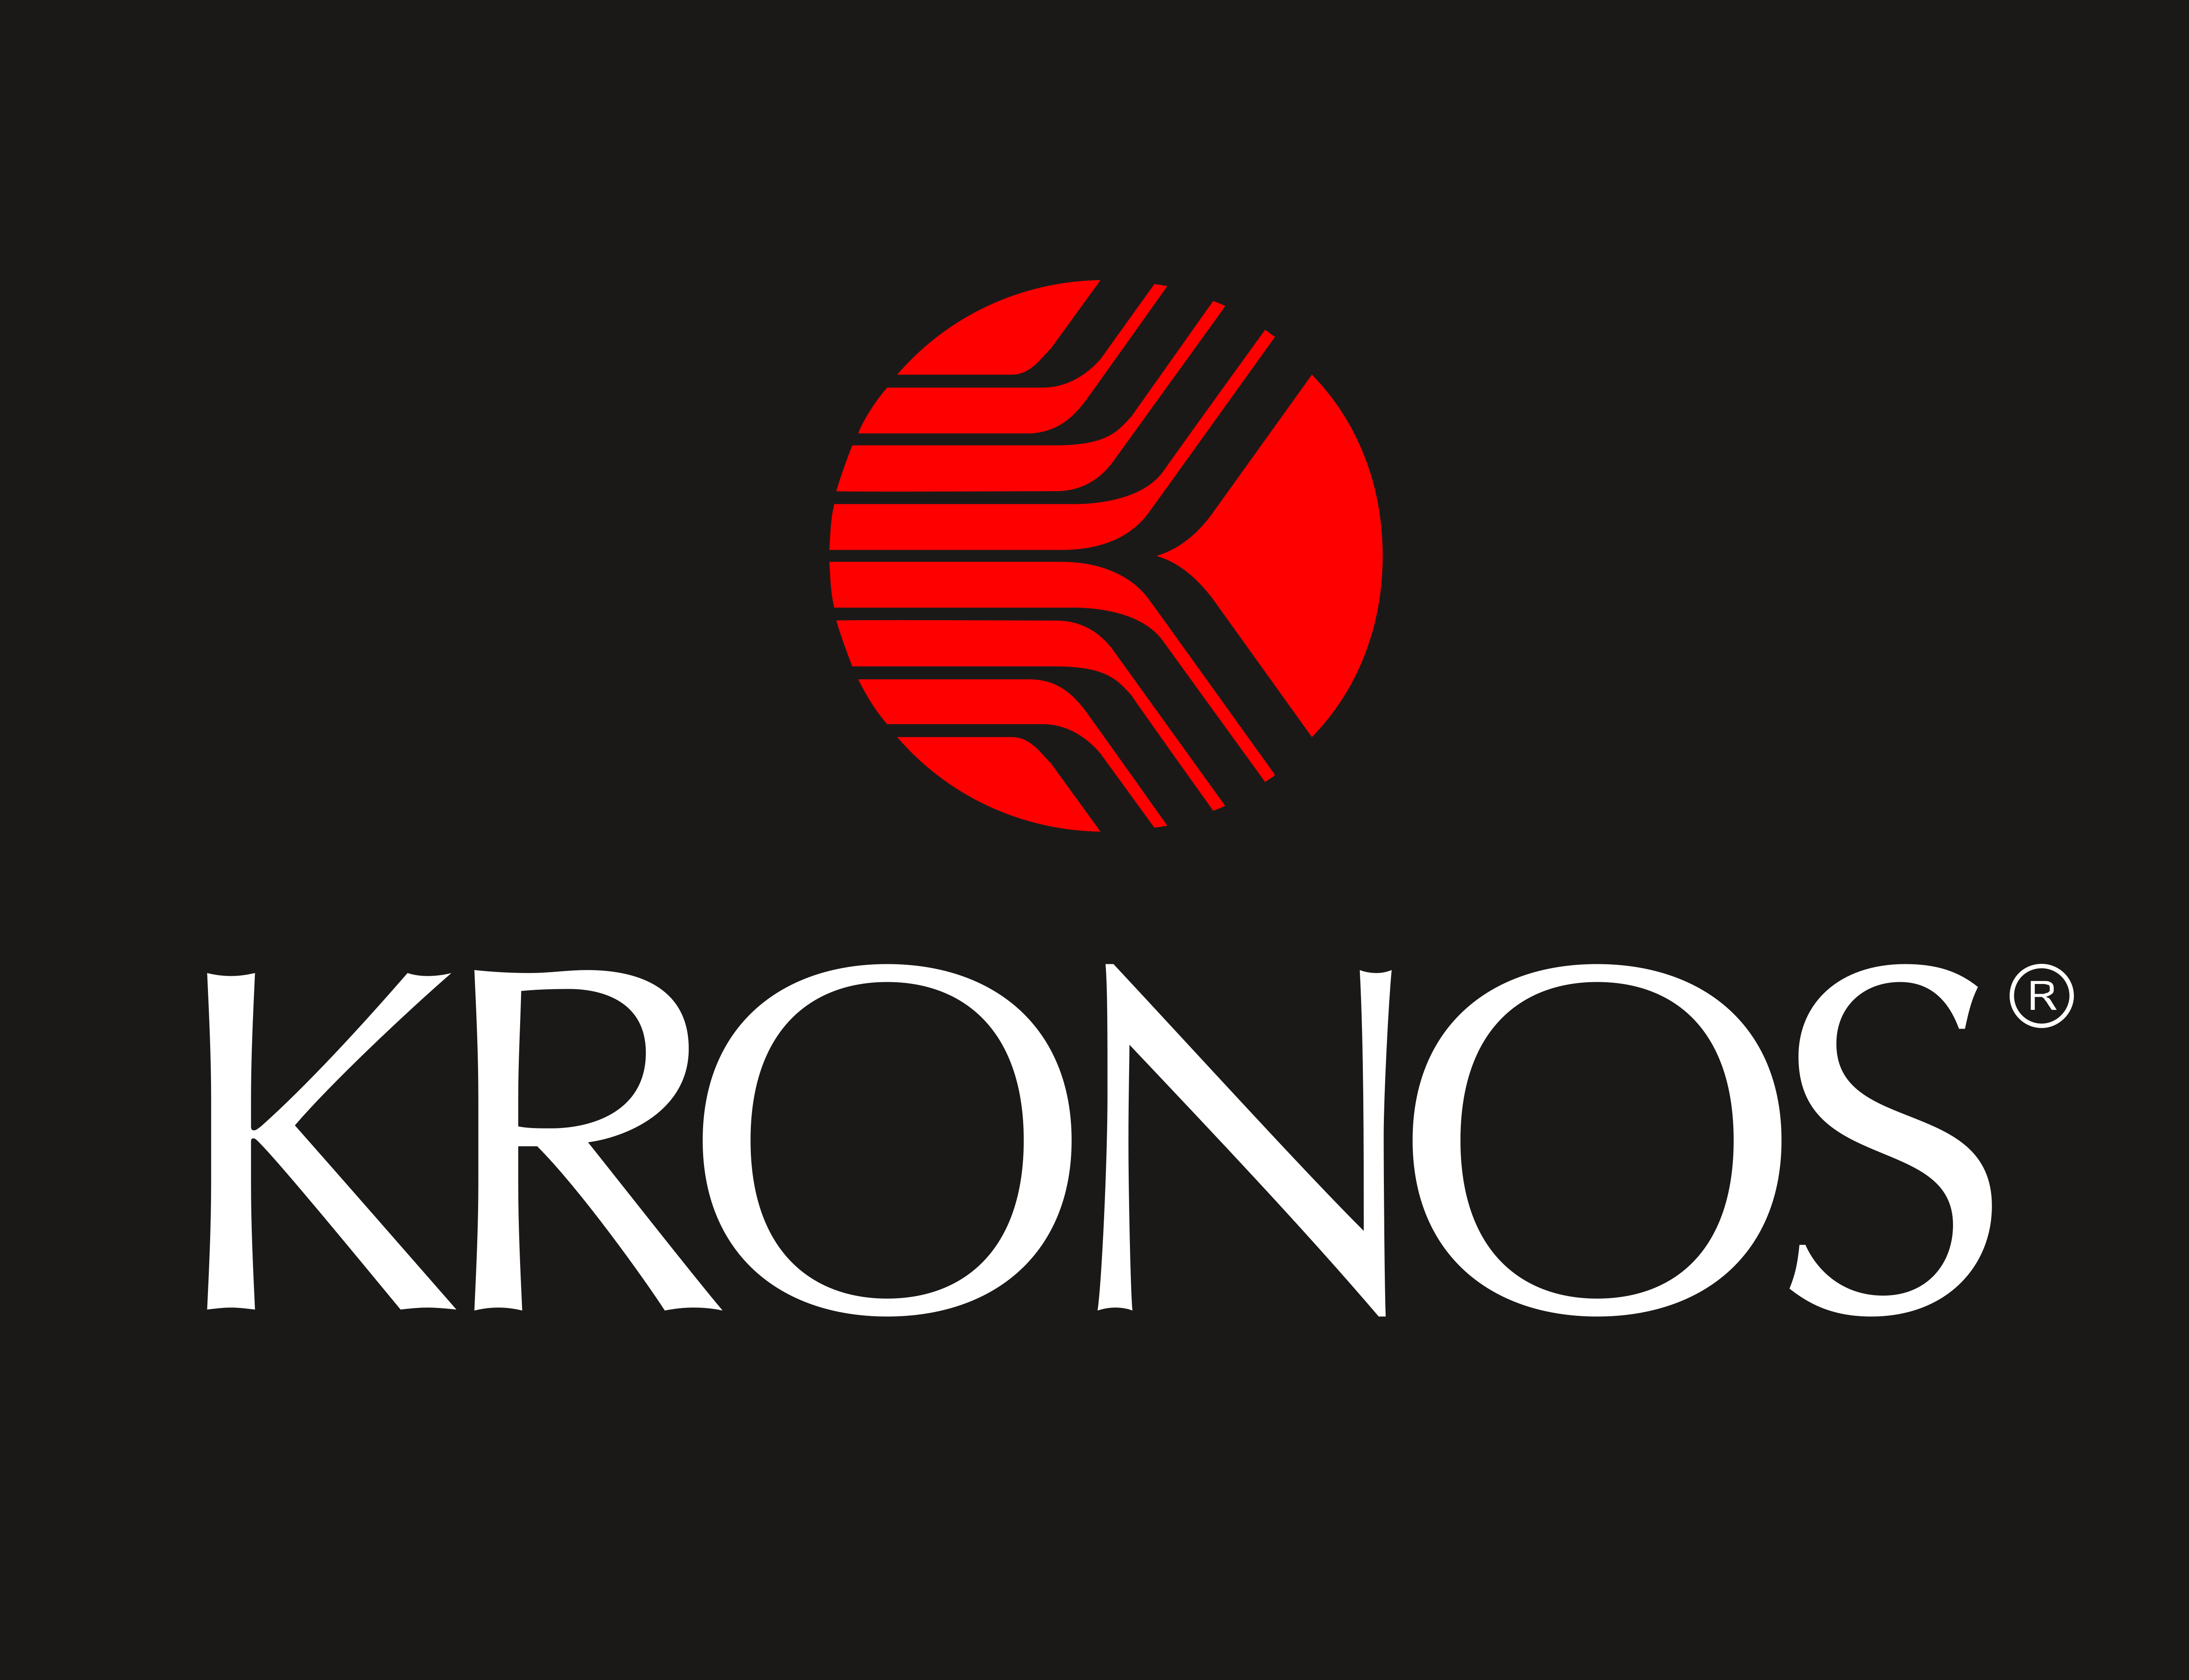 kronos time keeping software